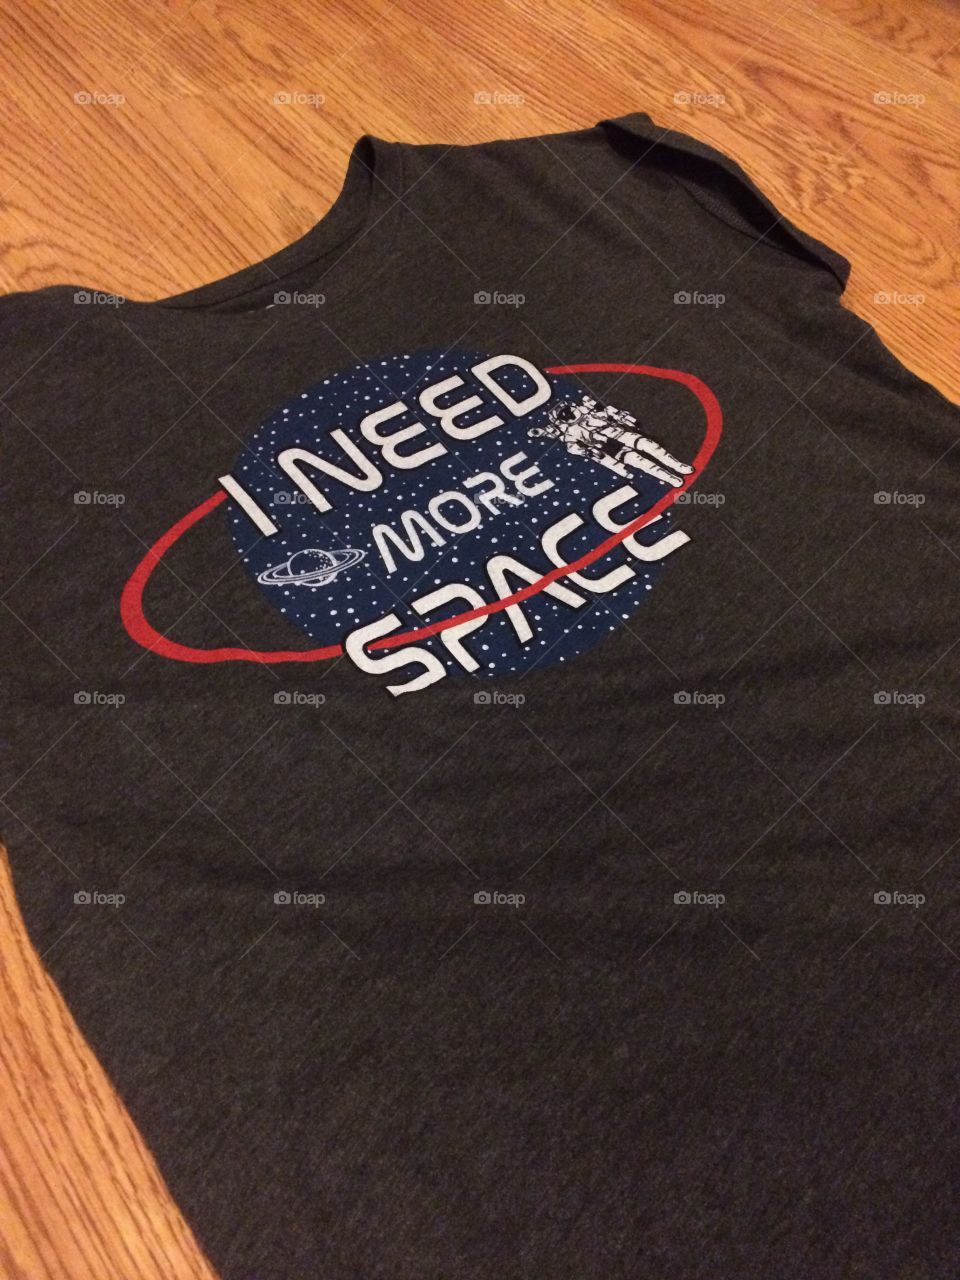 I need more space shirt 